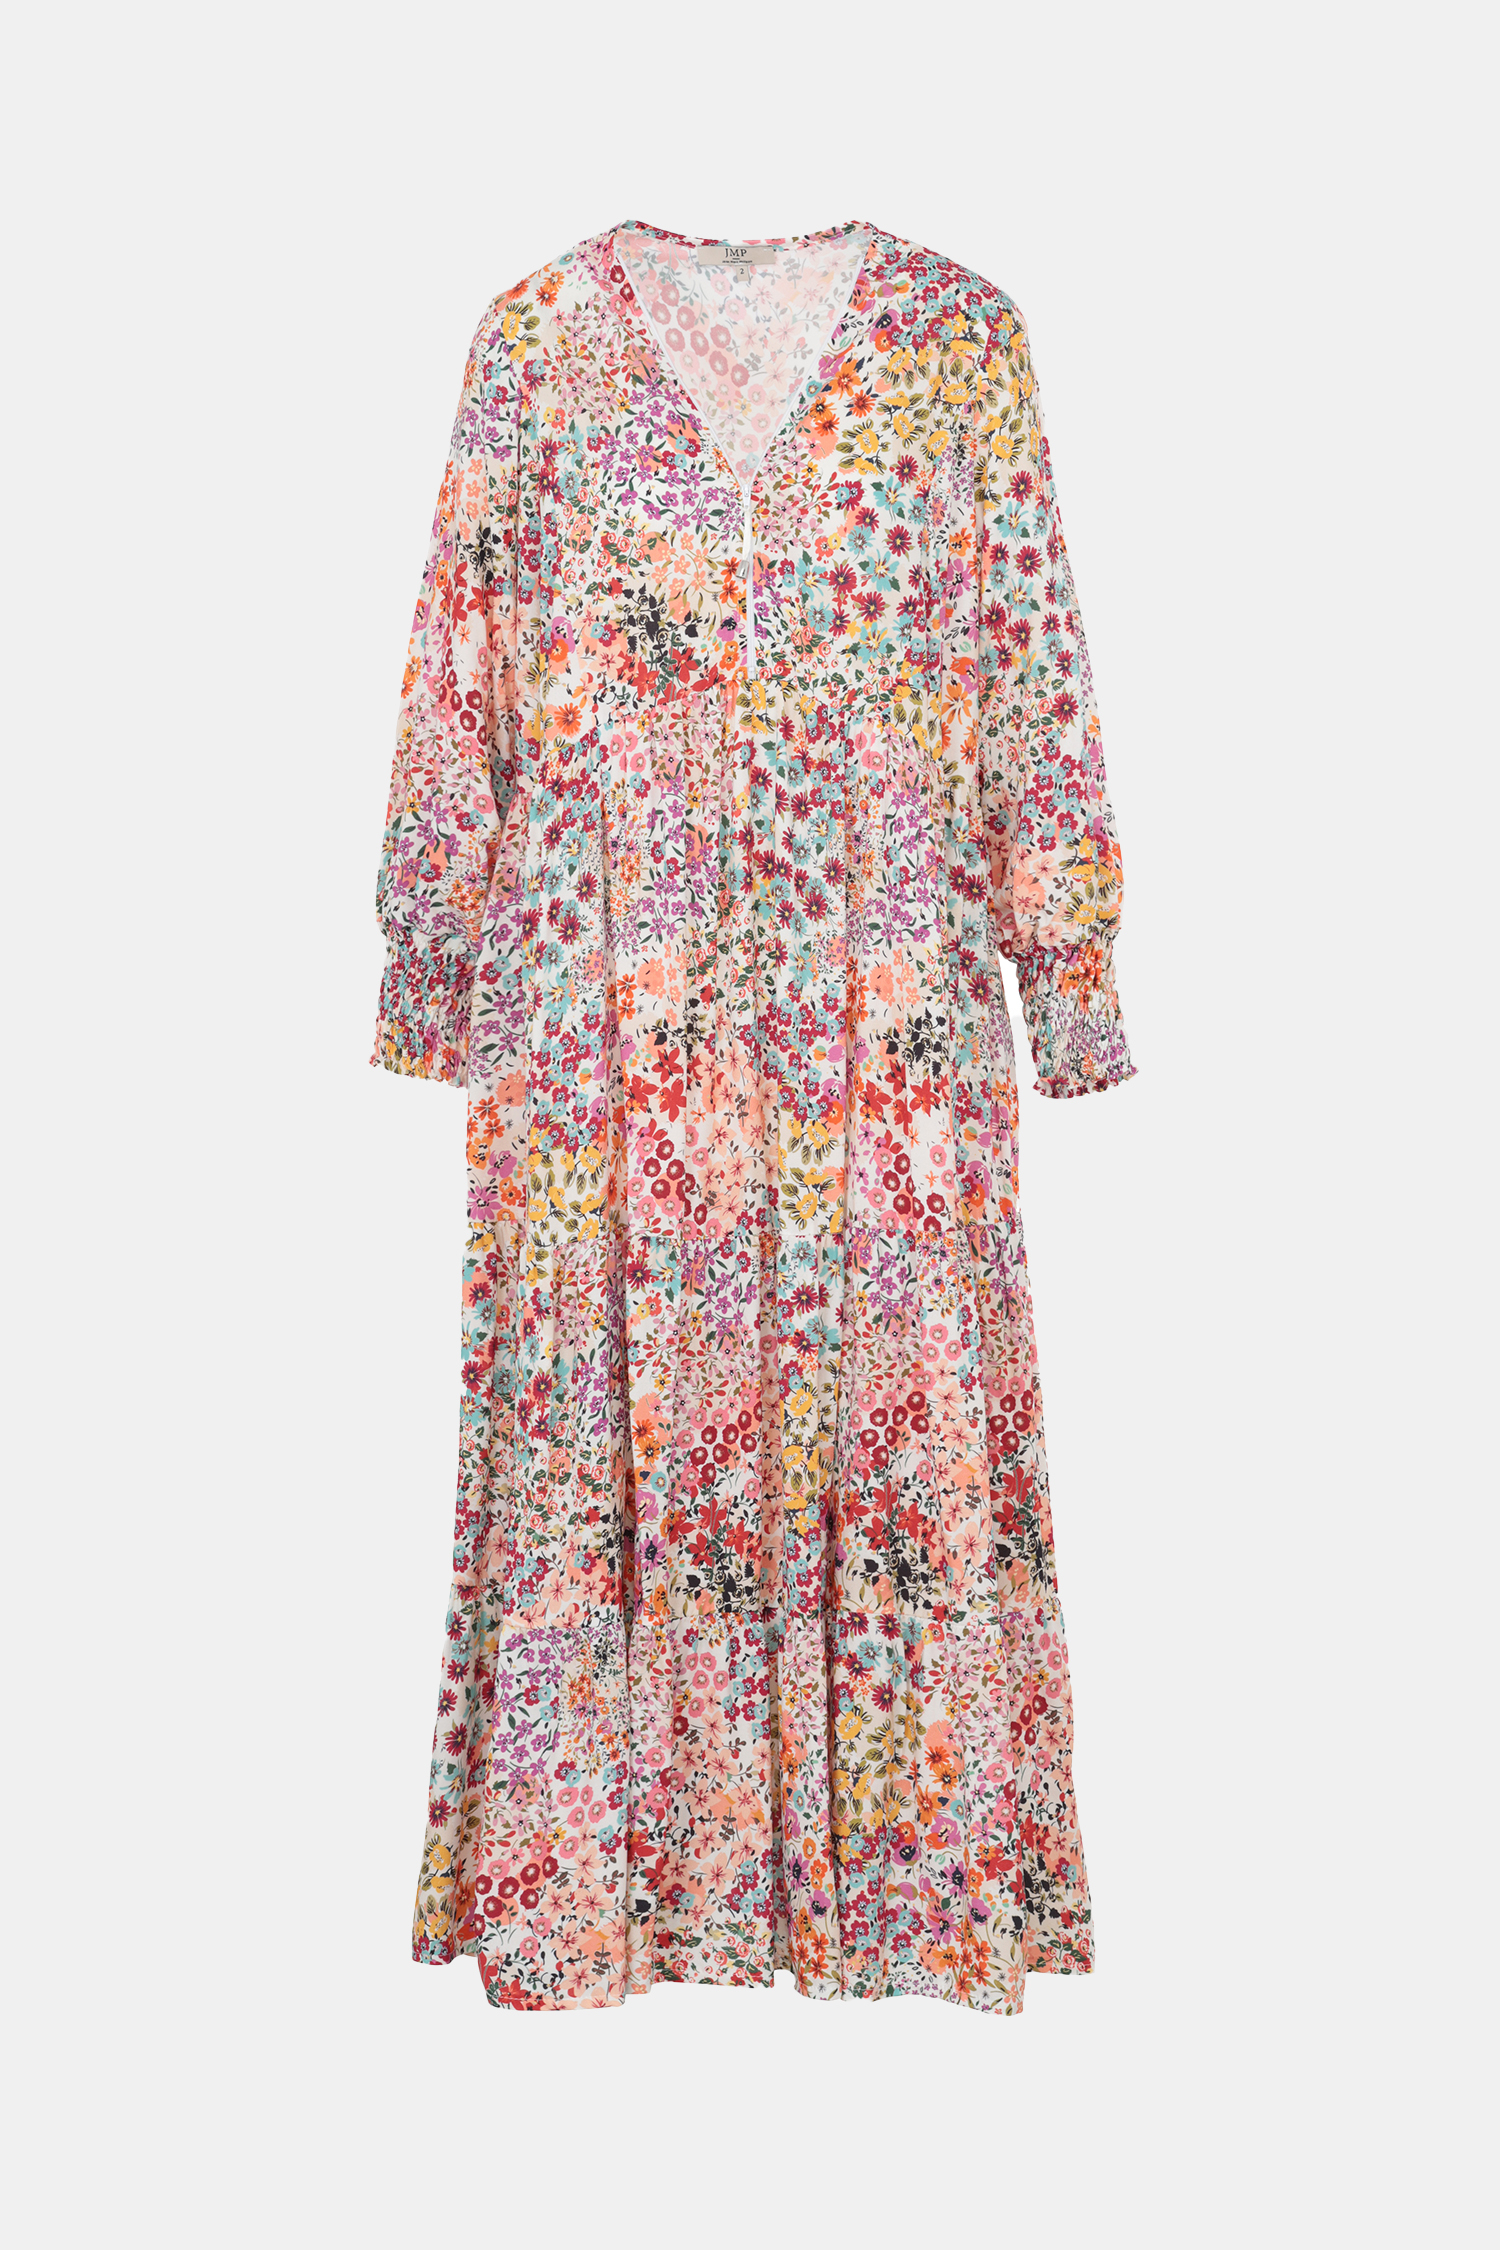 Bohemian style long dress in printed viscose eco-responsible fabrics